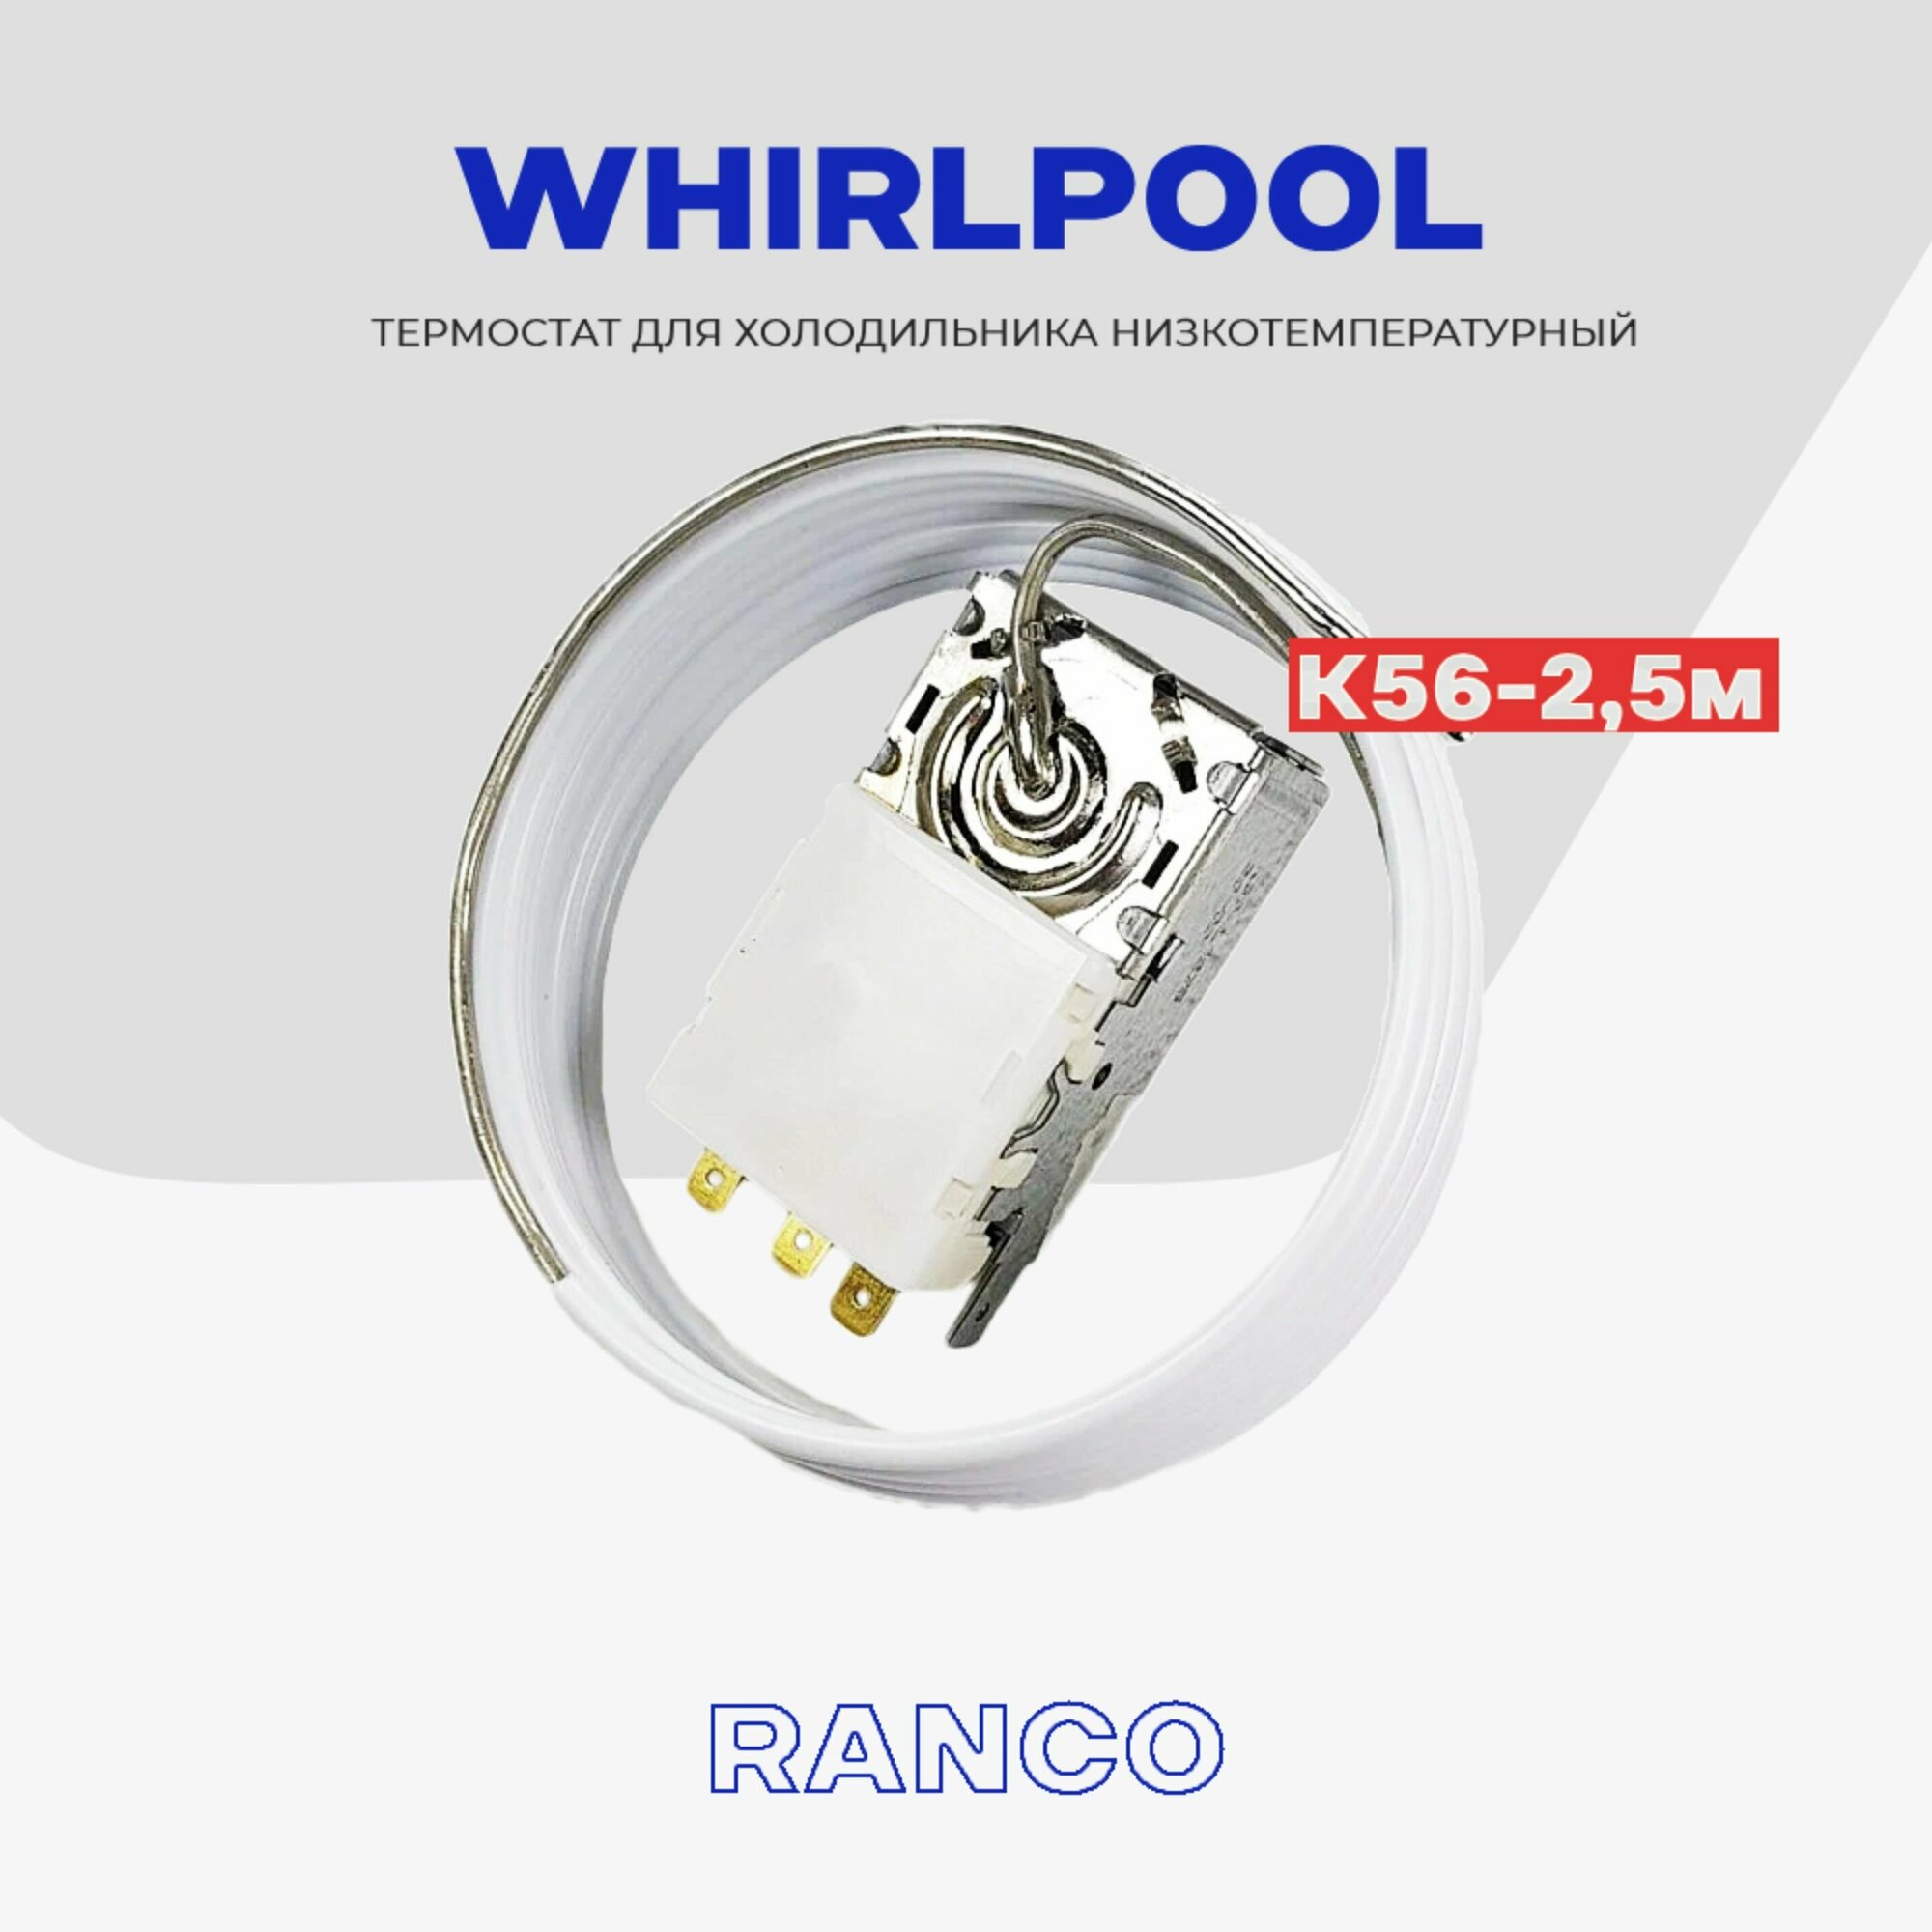 Термостат для холодильника Whirlpool К56 2,5м (L1915) / Терморегулятор морозильной камеры холодильника